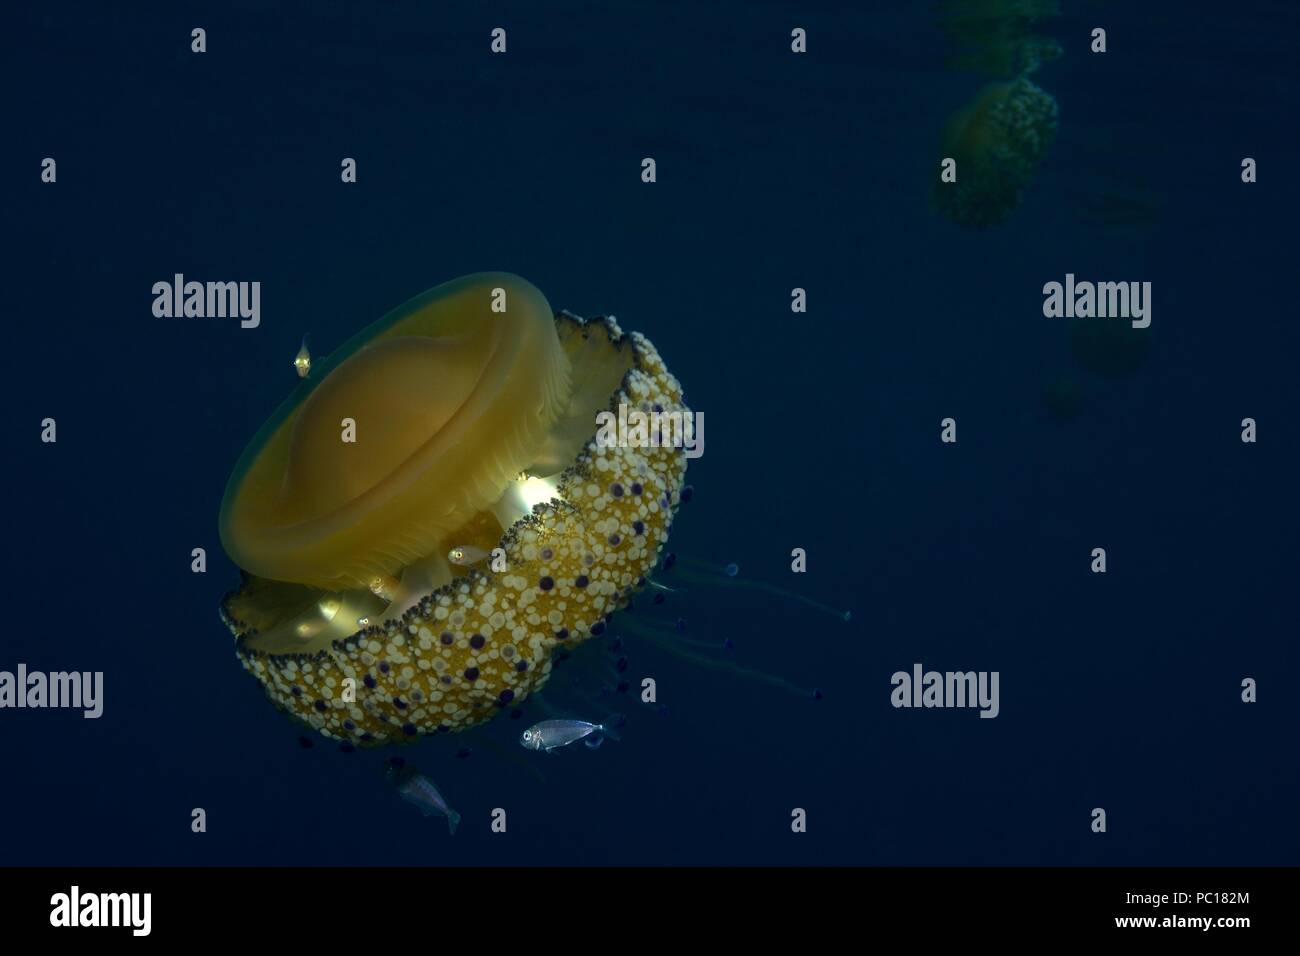 fried egg jellyfish, Spiegelei-Qualle, Cotylorhiza tuberculata, Symbiose mit juvenilen Trachurus sp., Tamariu, Costa Brava, mediterranean, Mittelmeer Stock Photo